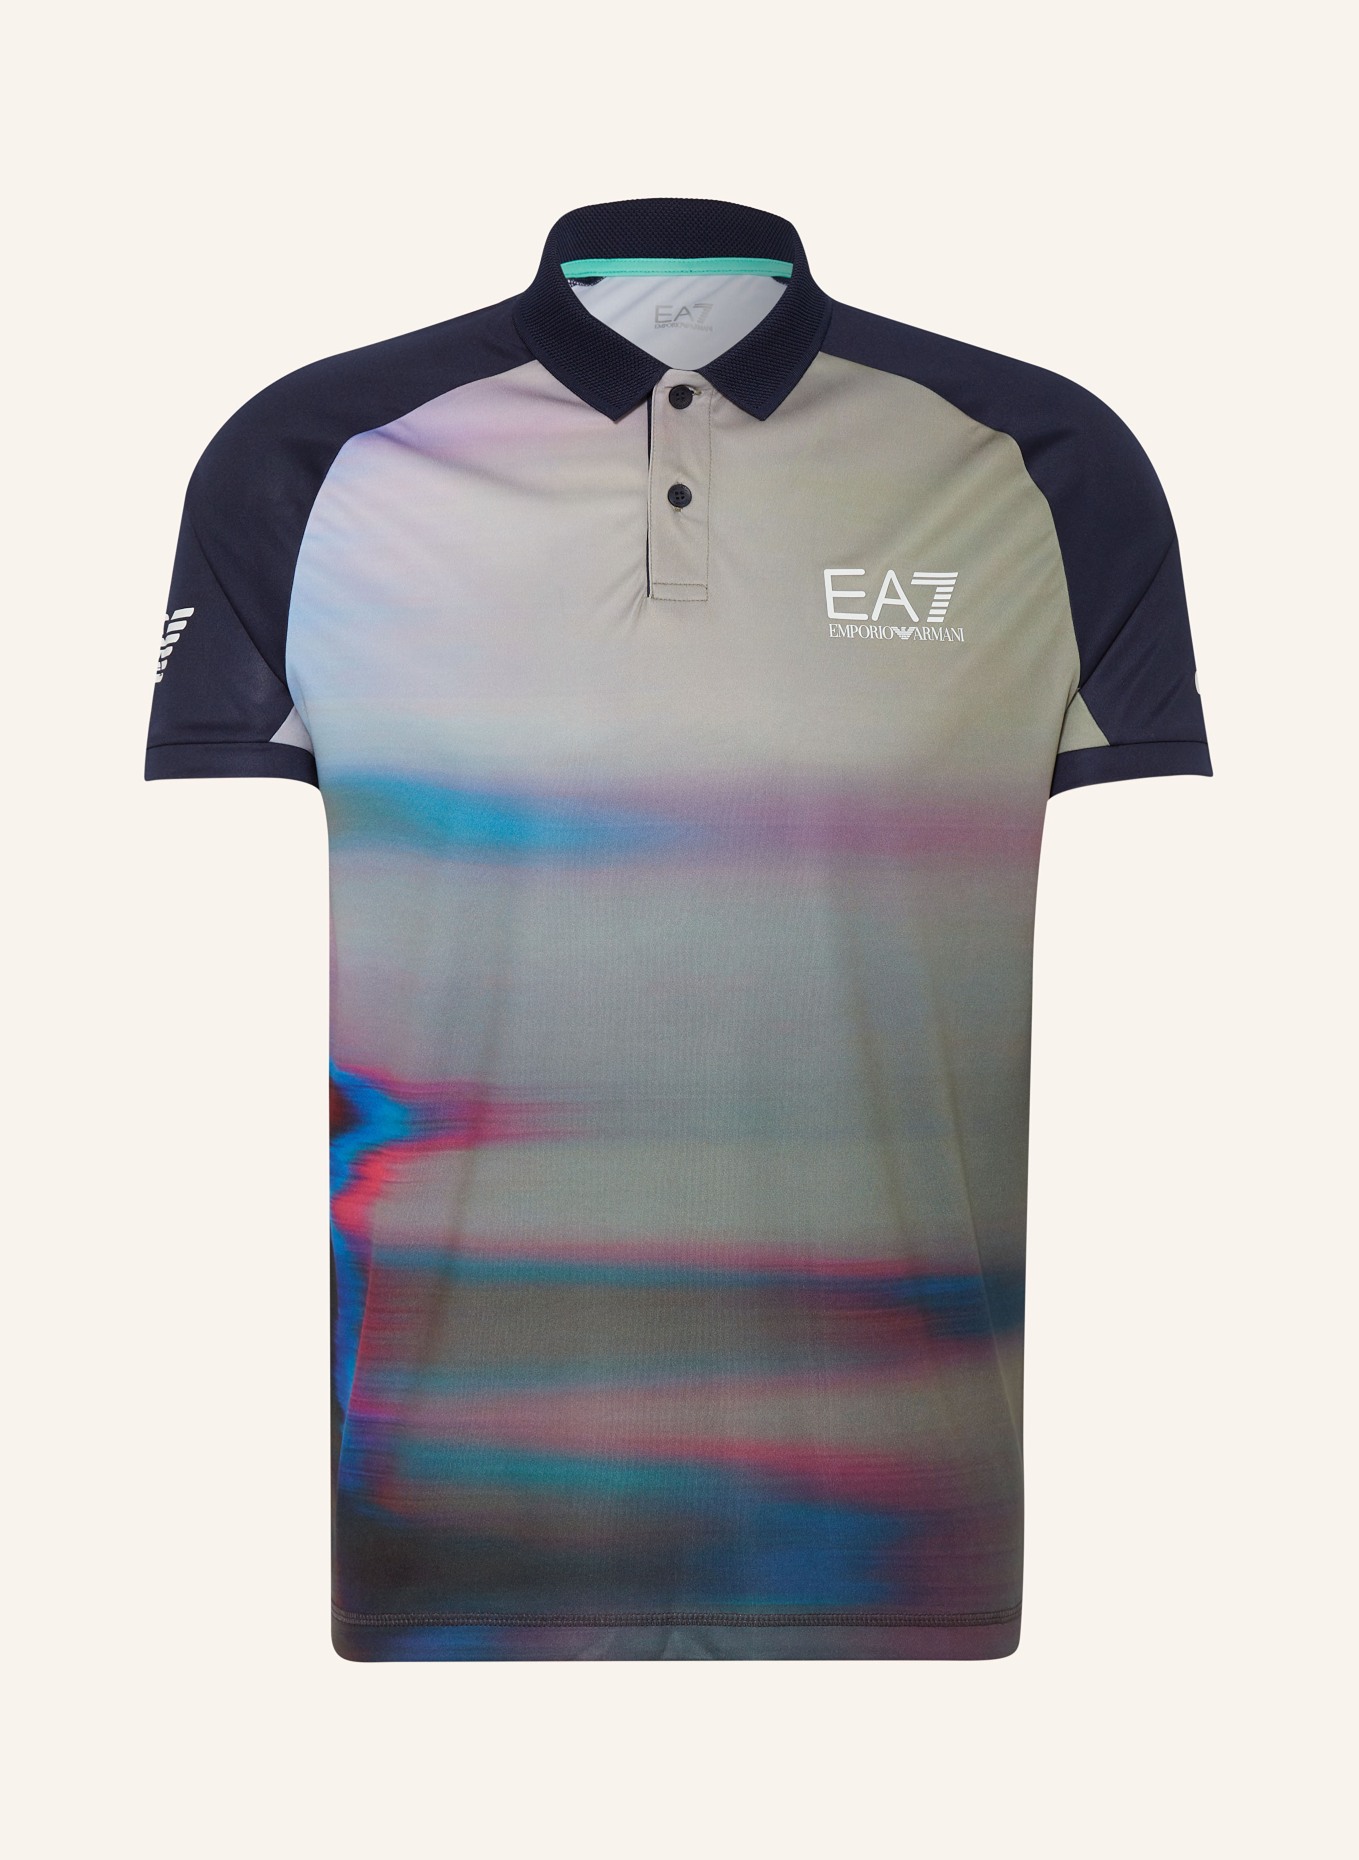 EA7 EMPORIO ARMANI Funktions-Poloshirt PJUHZ, Farbe: BLAU/ KHAKI/ LILA (Bild 1)